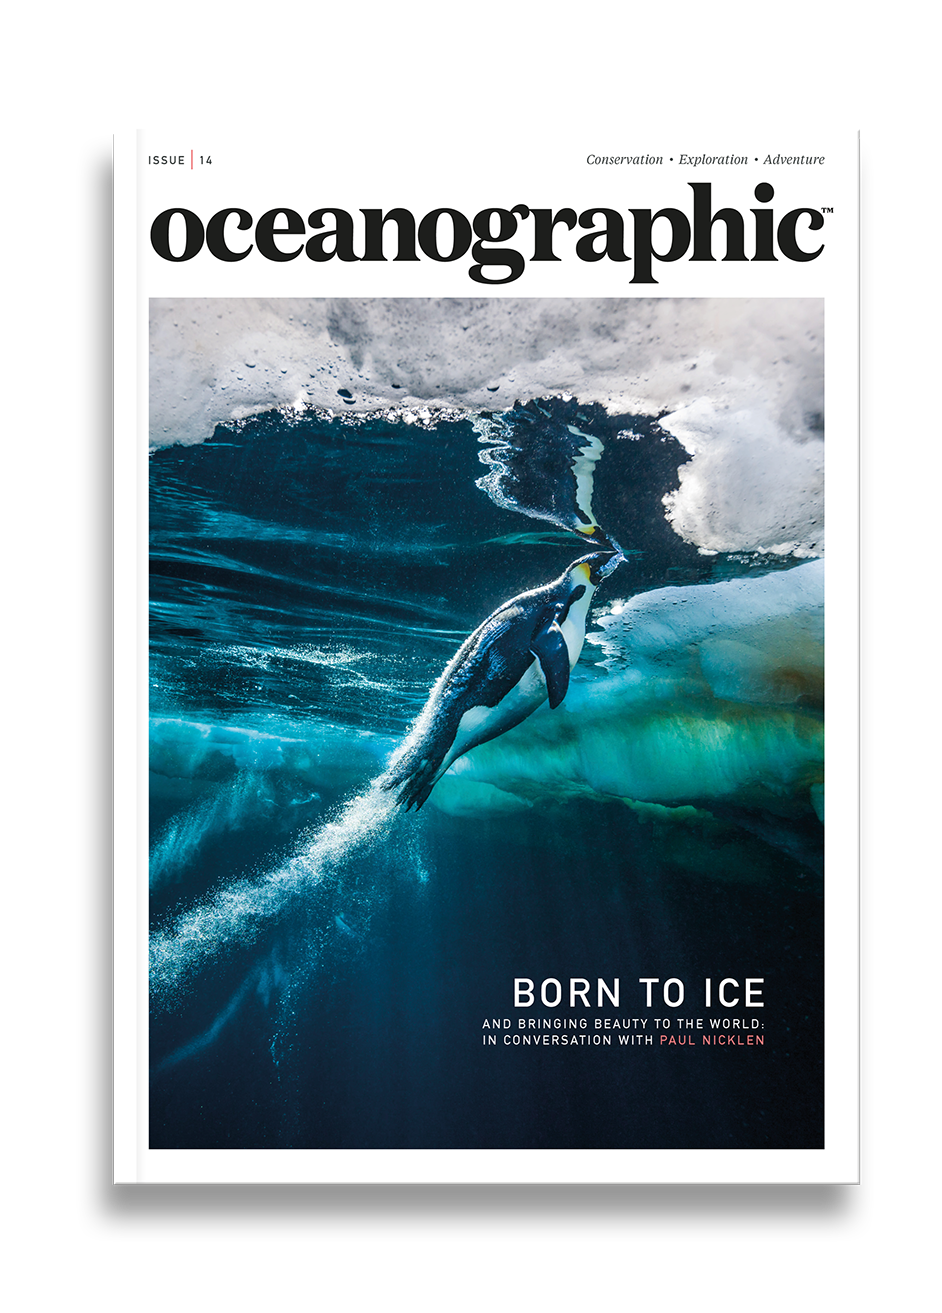 Oceanographic Magazine, Issue 14, Born to Ice